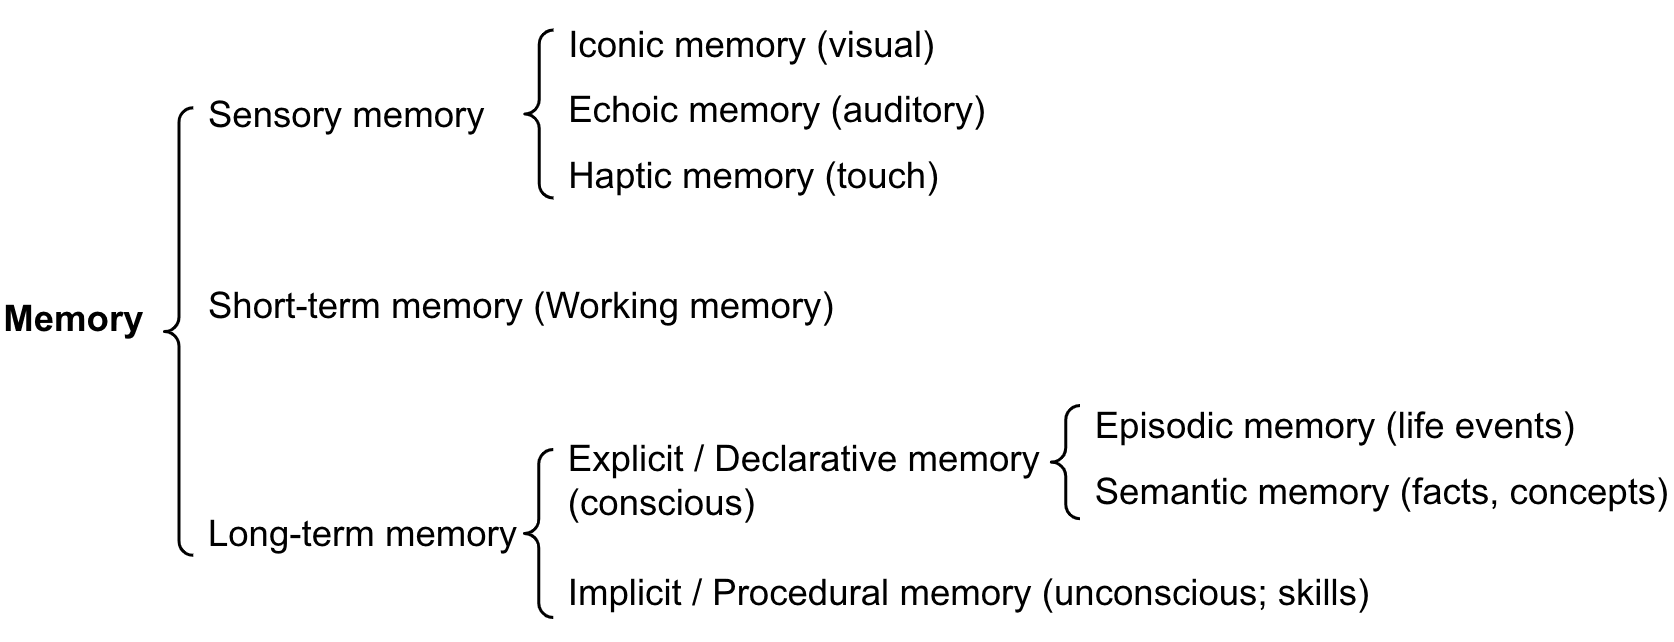 Categorization of human memory